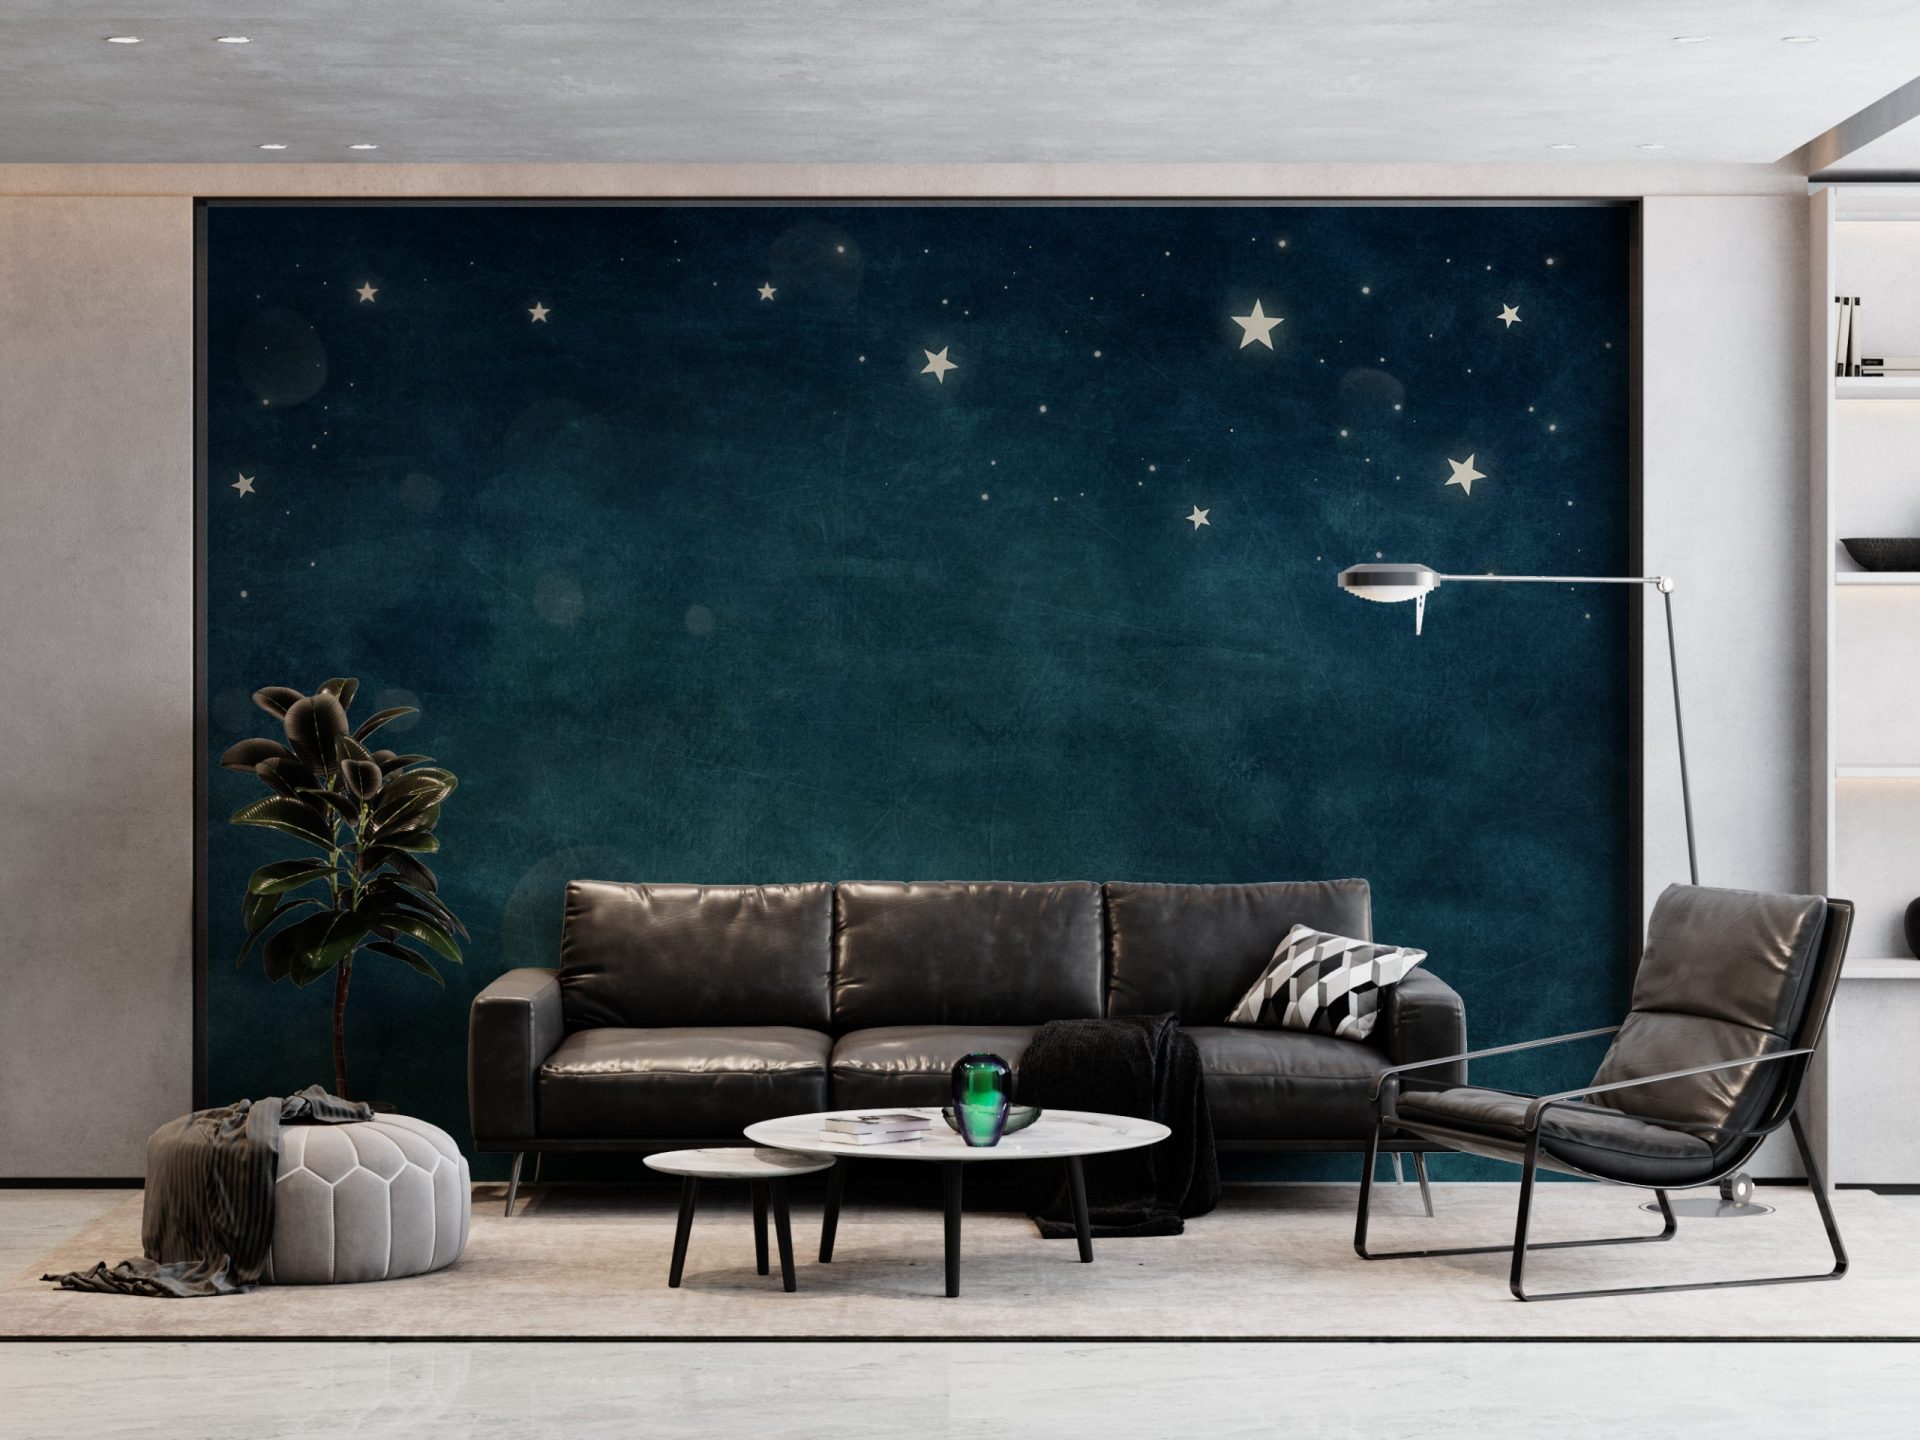 Night Sky Starry Design Wallpaper Mural